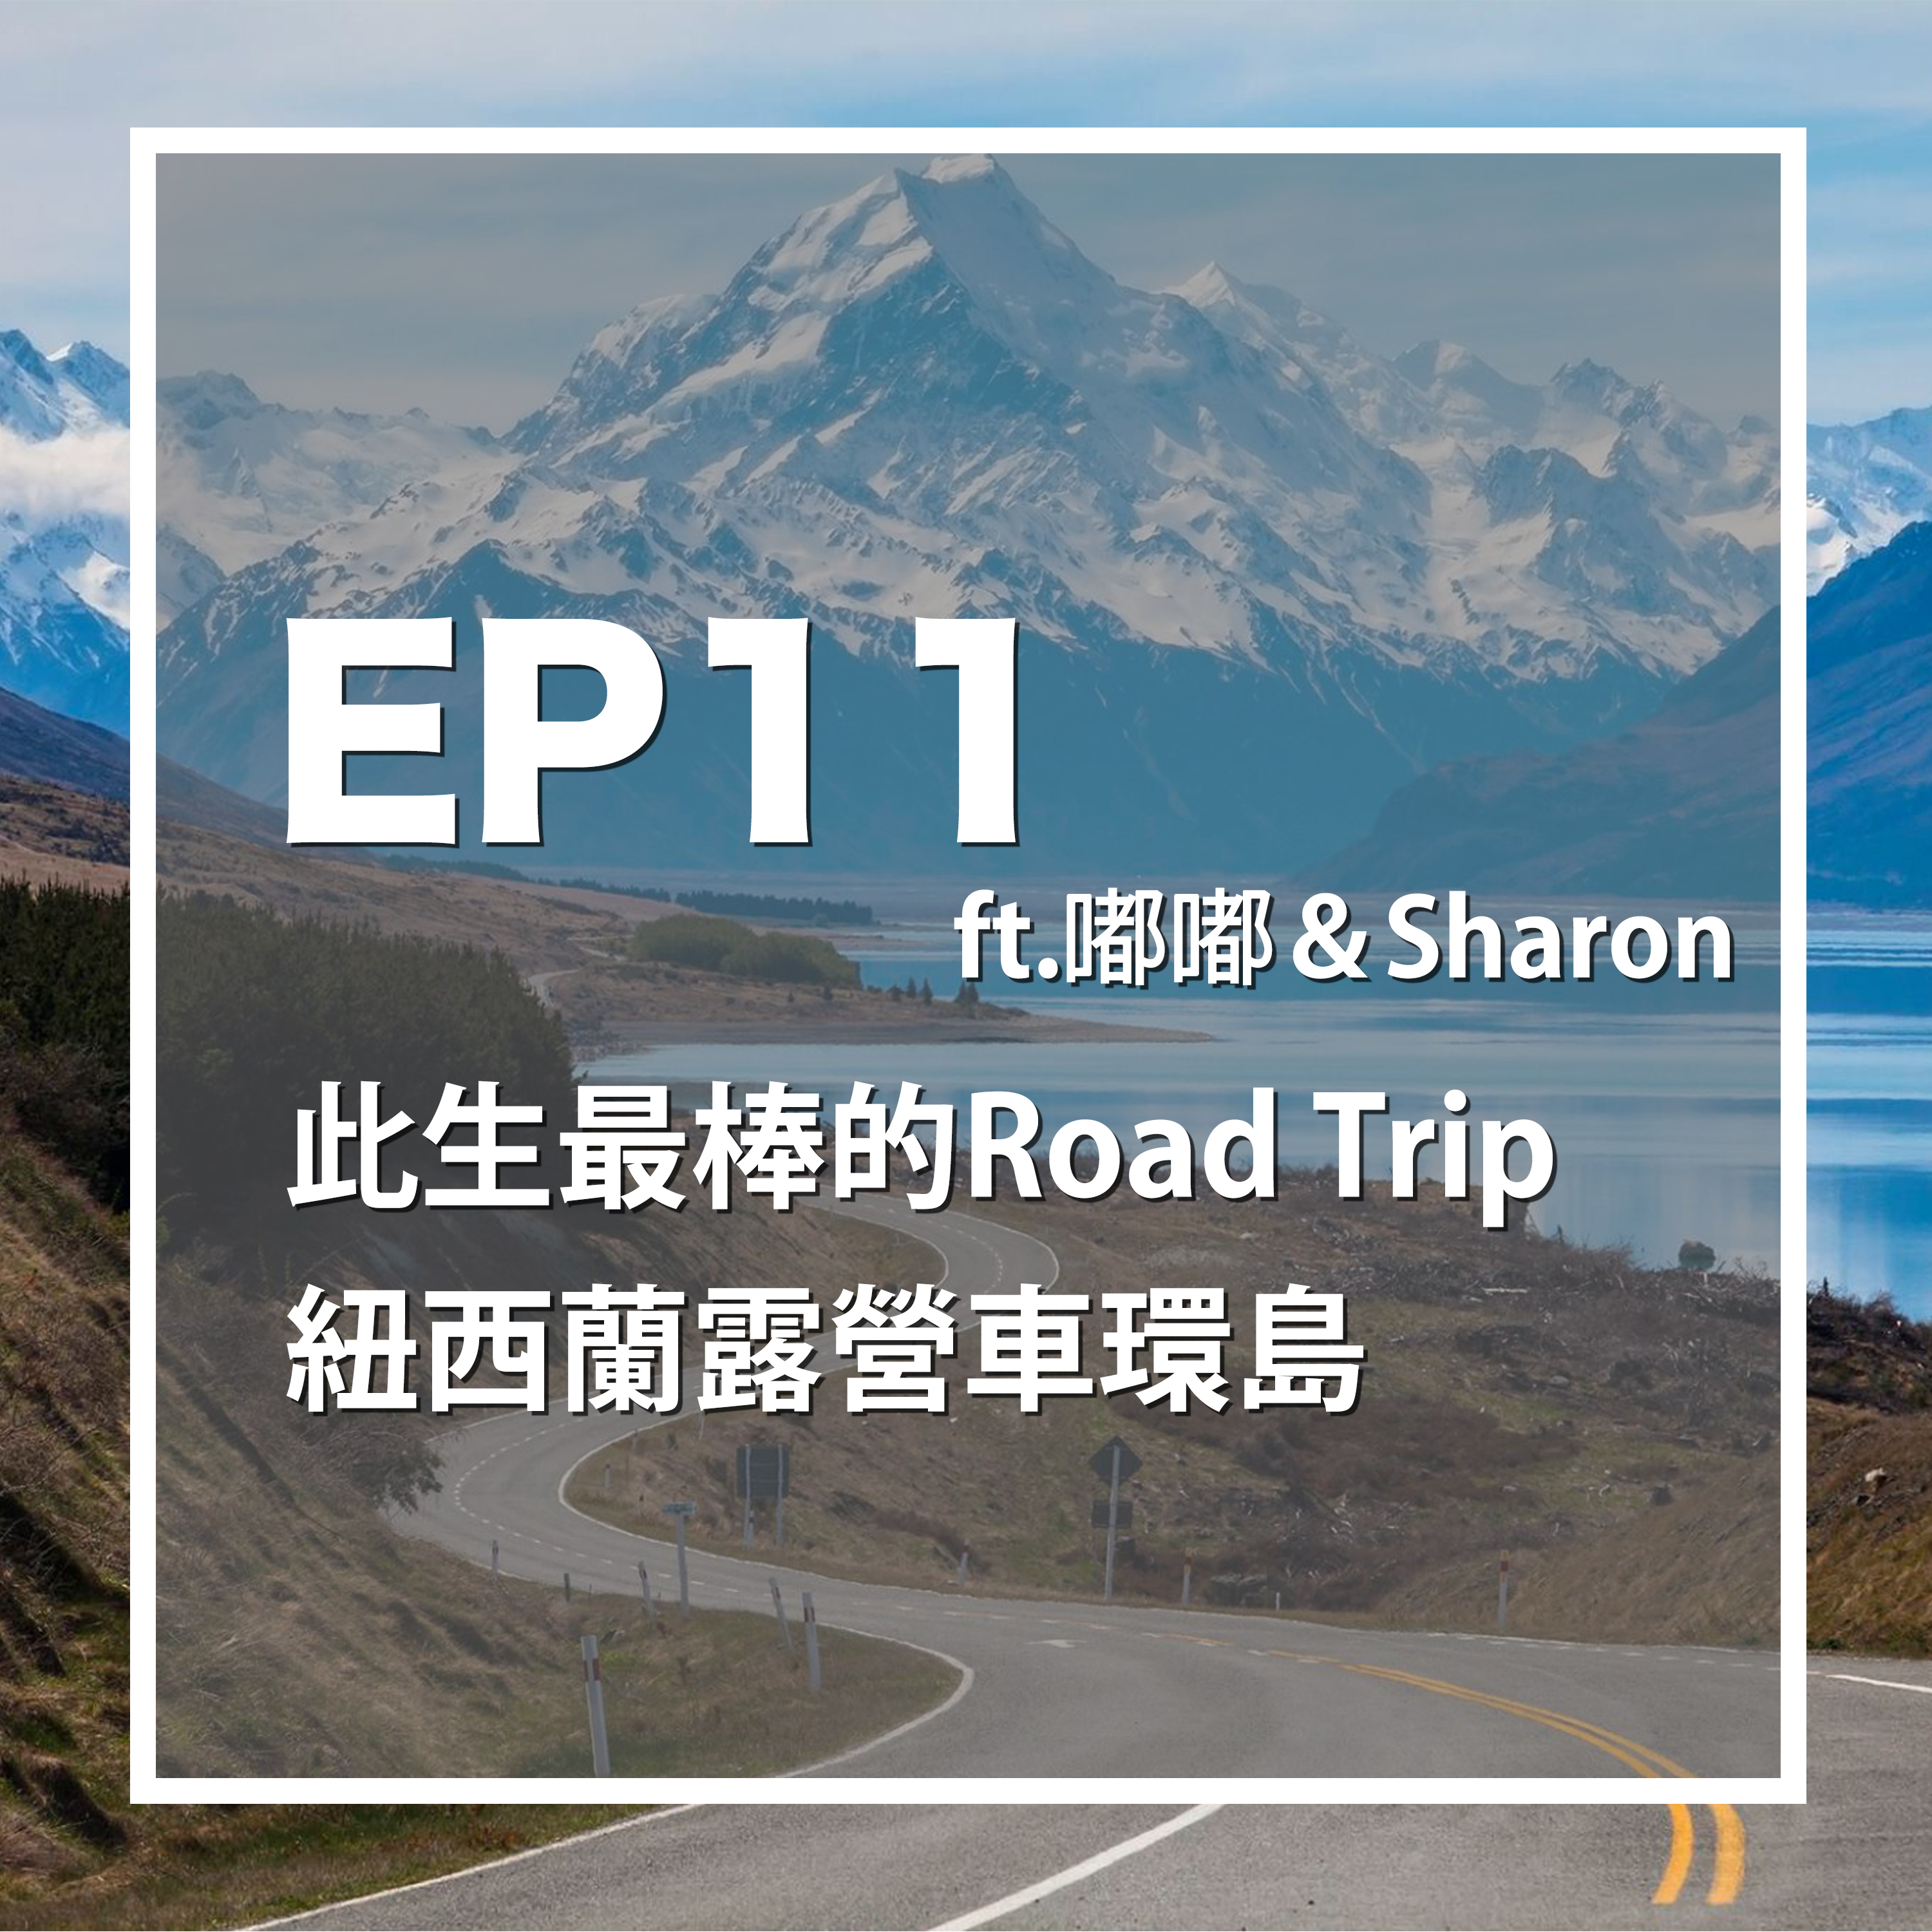 EP11 此生最棒的Road Trip - 紐西蘭露營車環島 ft. 嘟嘟＆Sharon